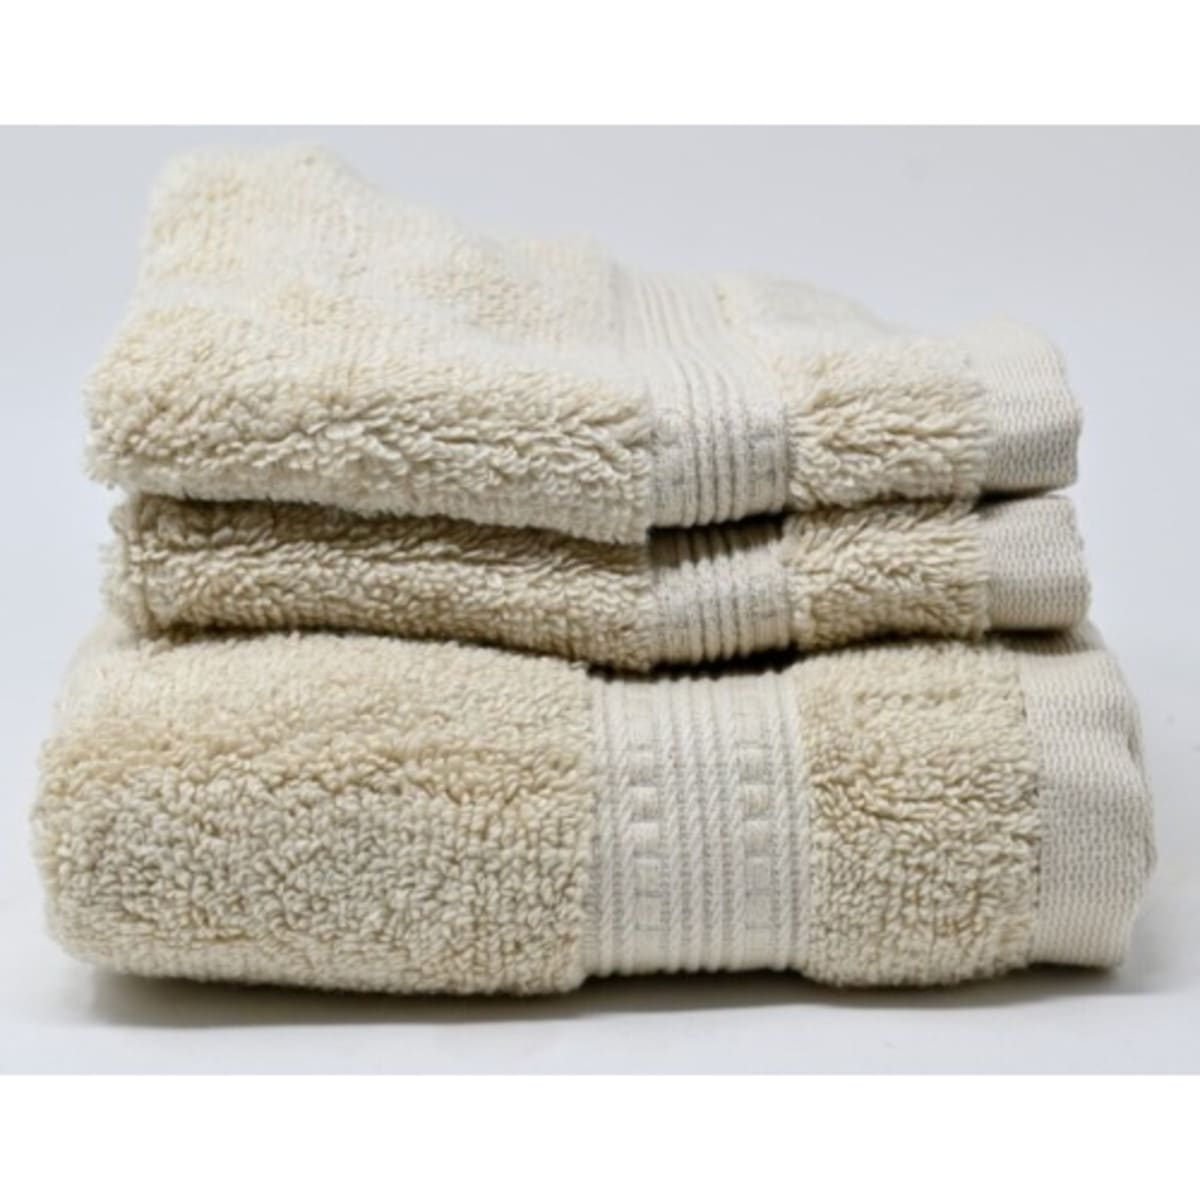 Charisma, Bath, Charisma 0hygrocotton 4piece Hand Towels Set